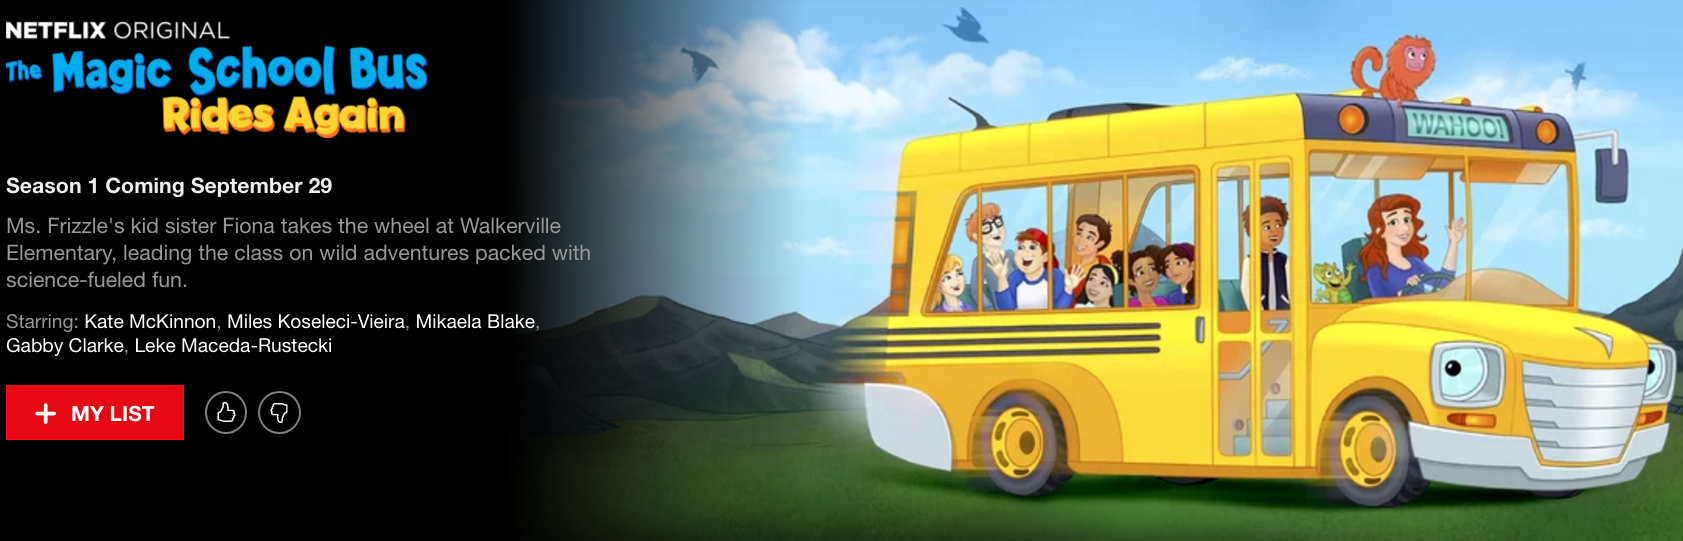 The Magic School Bus Netflix